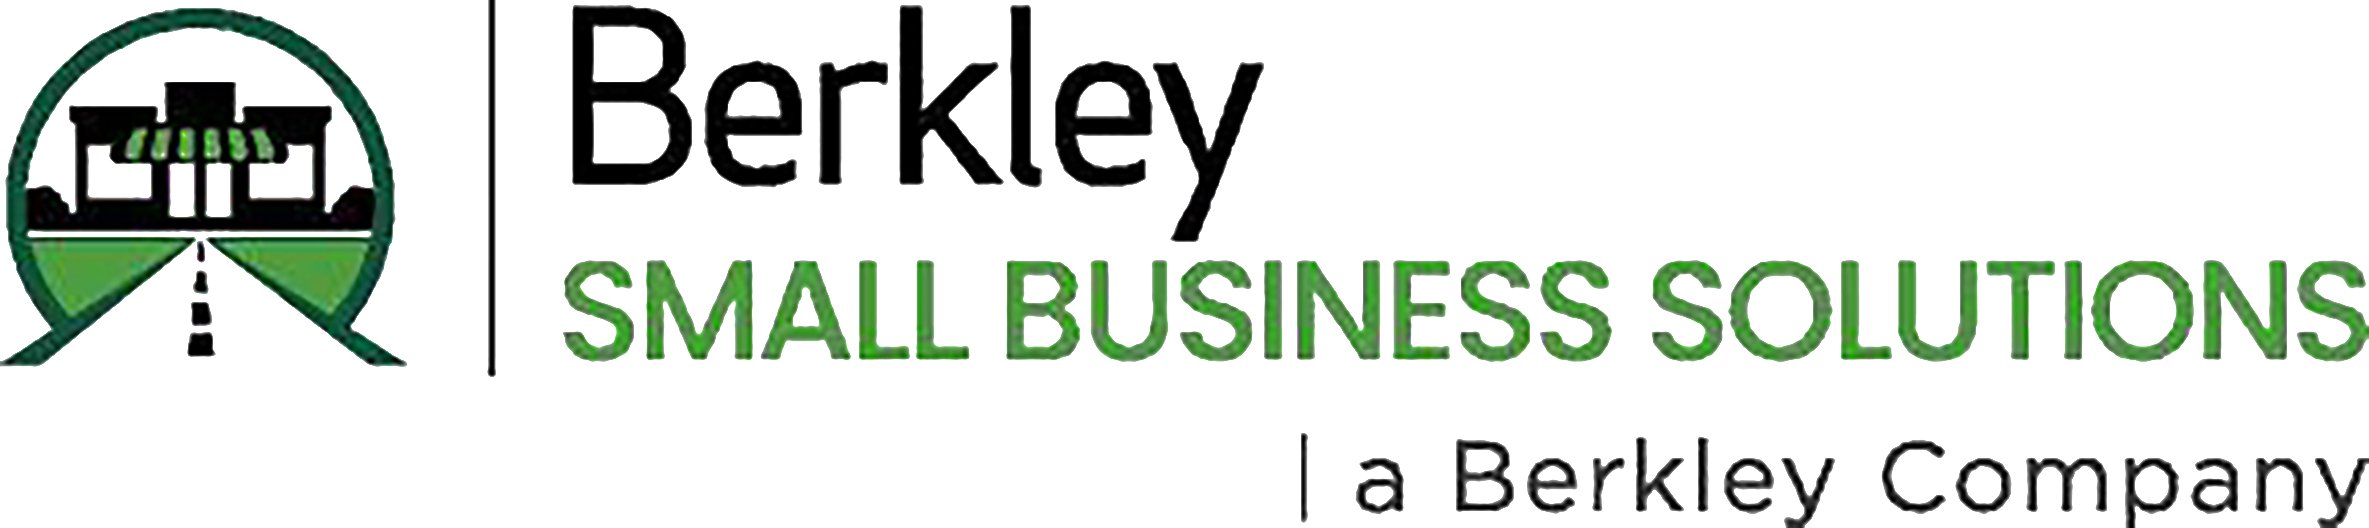 Berkley Small Business